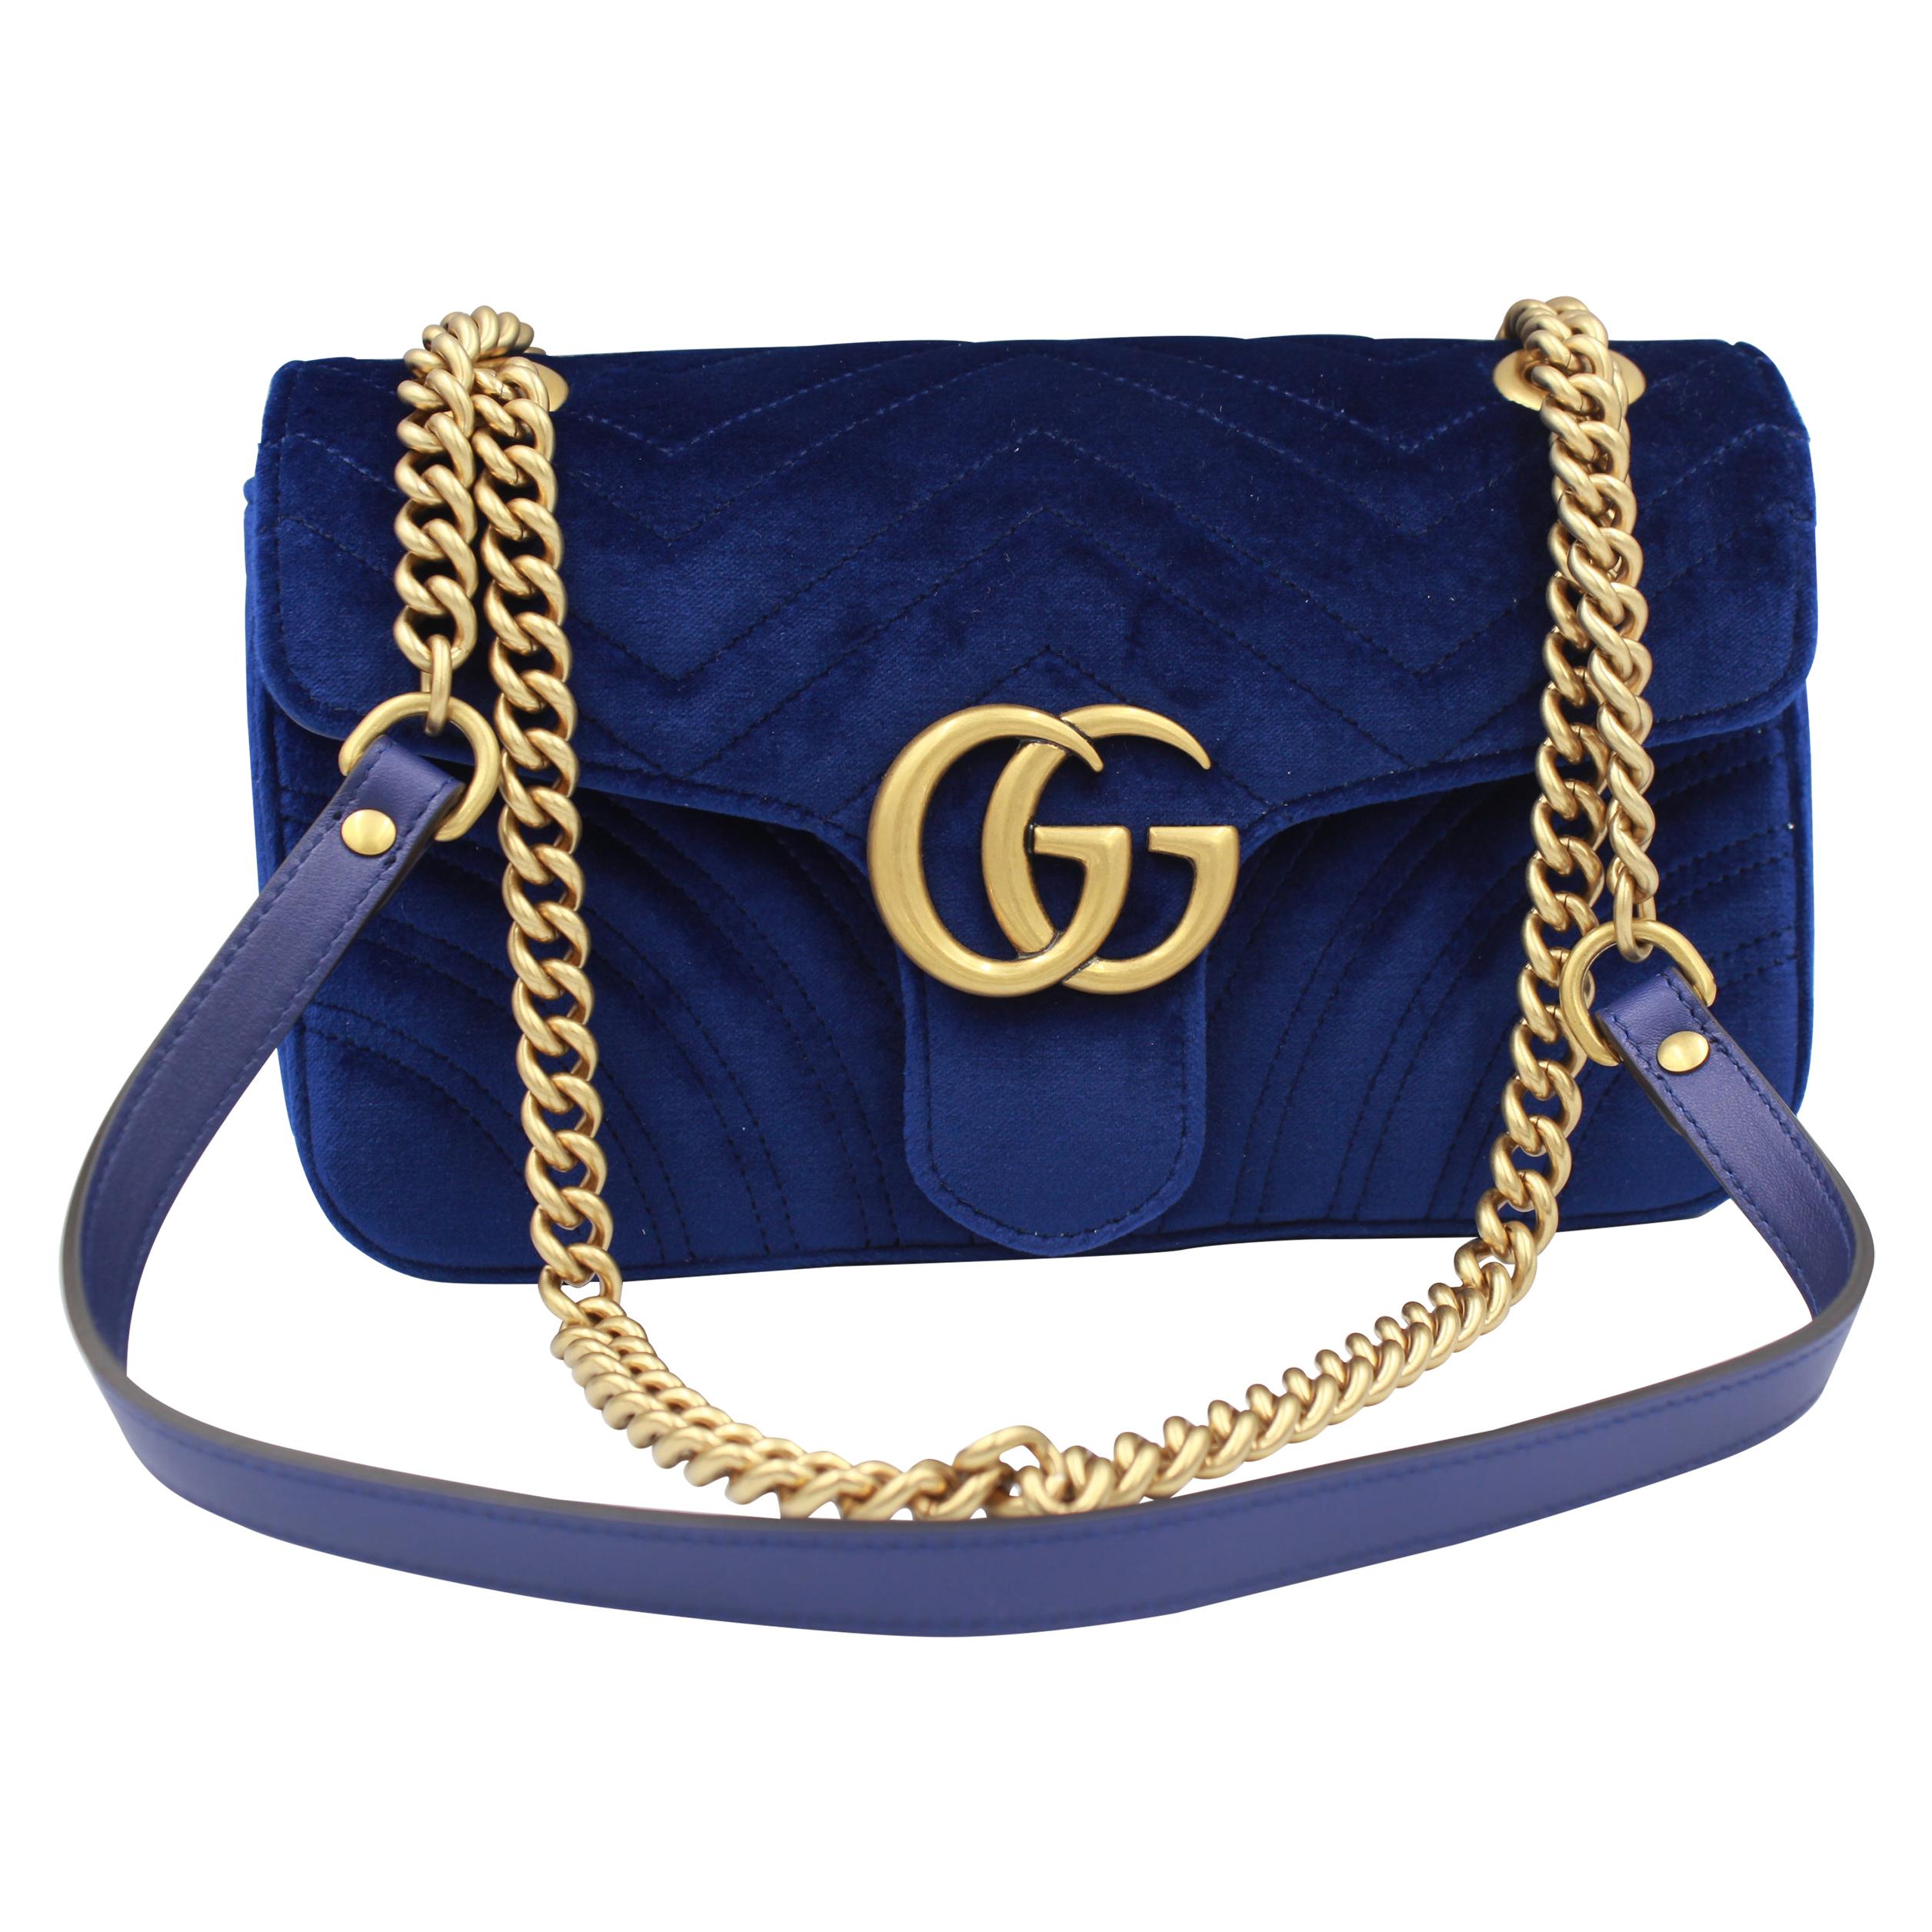 Gucci Marmont GG handbag in dark blue velvet.